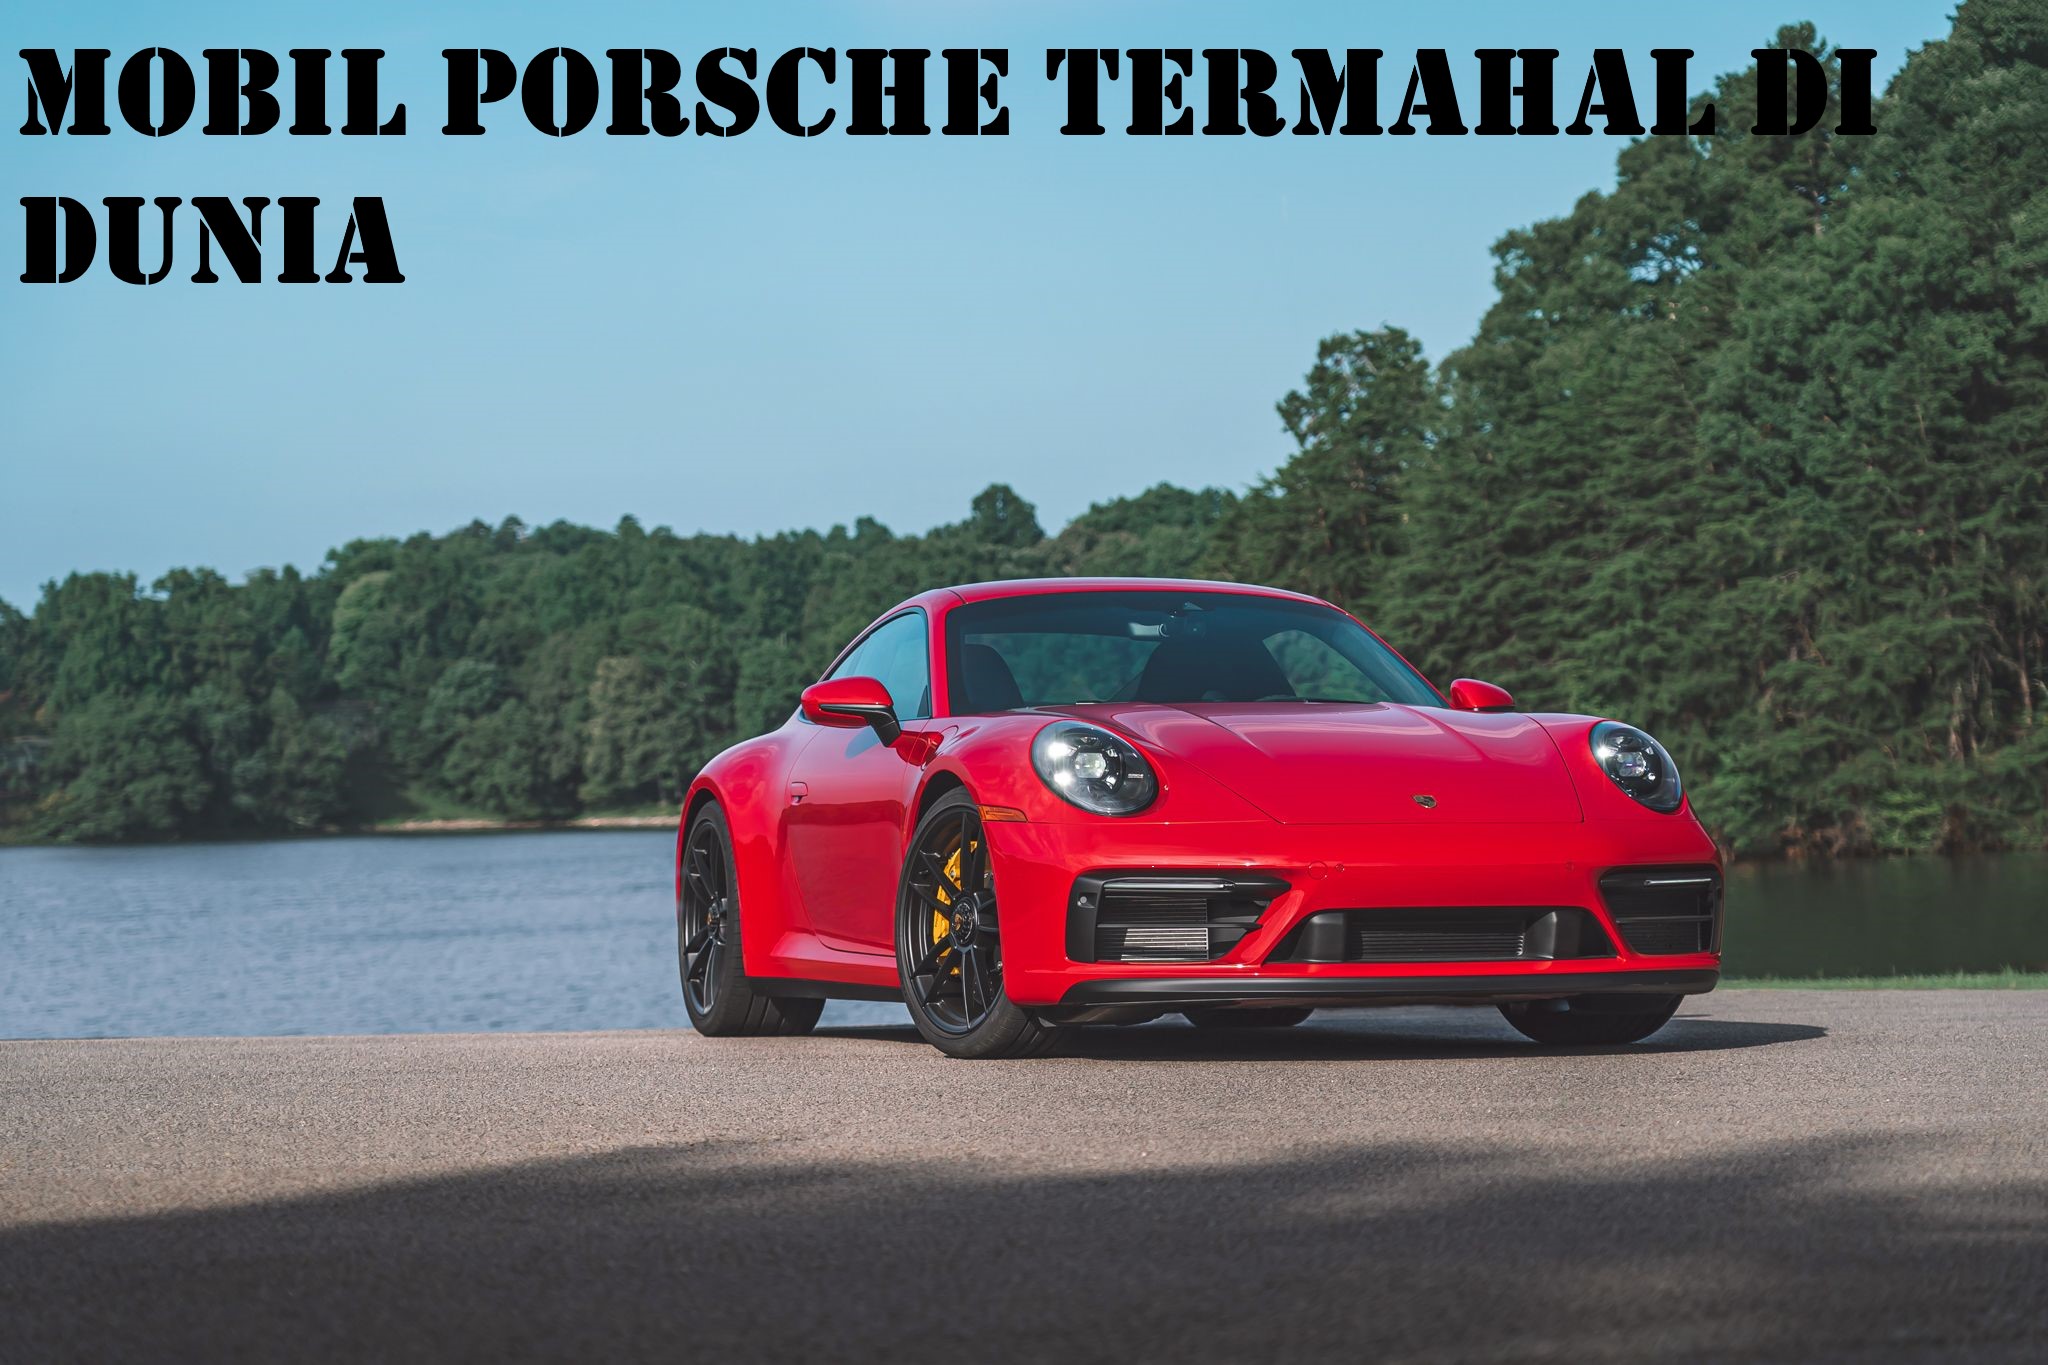 Mobil Porsche Termahal Di Dunia